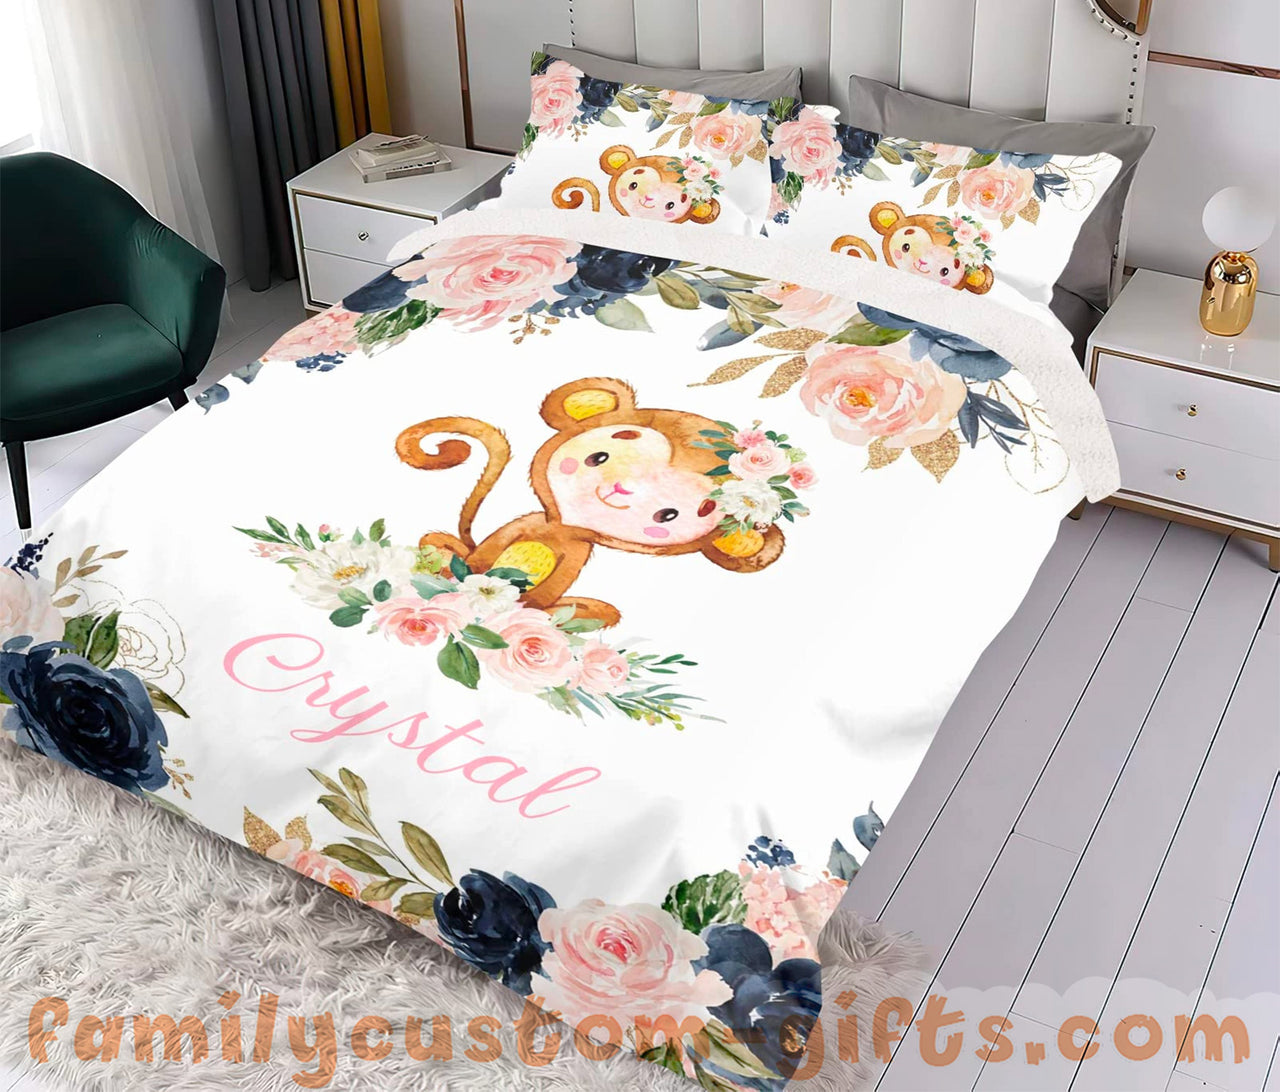 Custom Quilt Sets Watercolor Pink Dark Floral Monkey Premium Quilt Bedding for Boys Girls Men Women